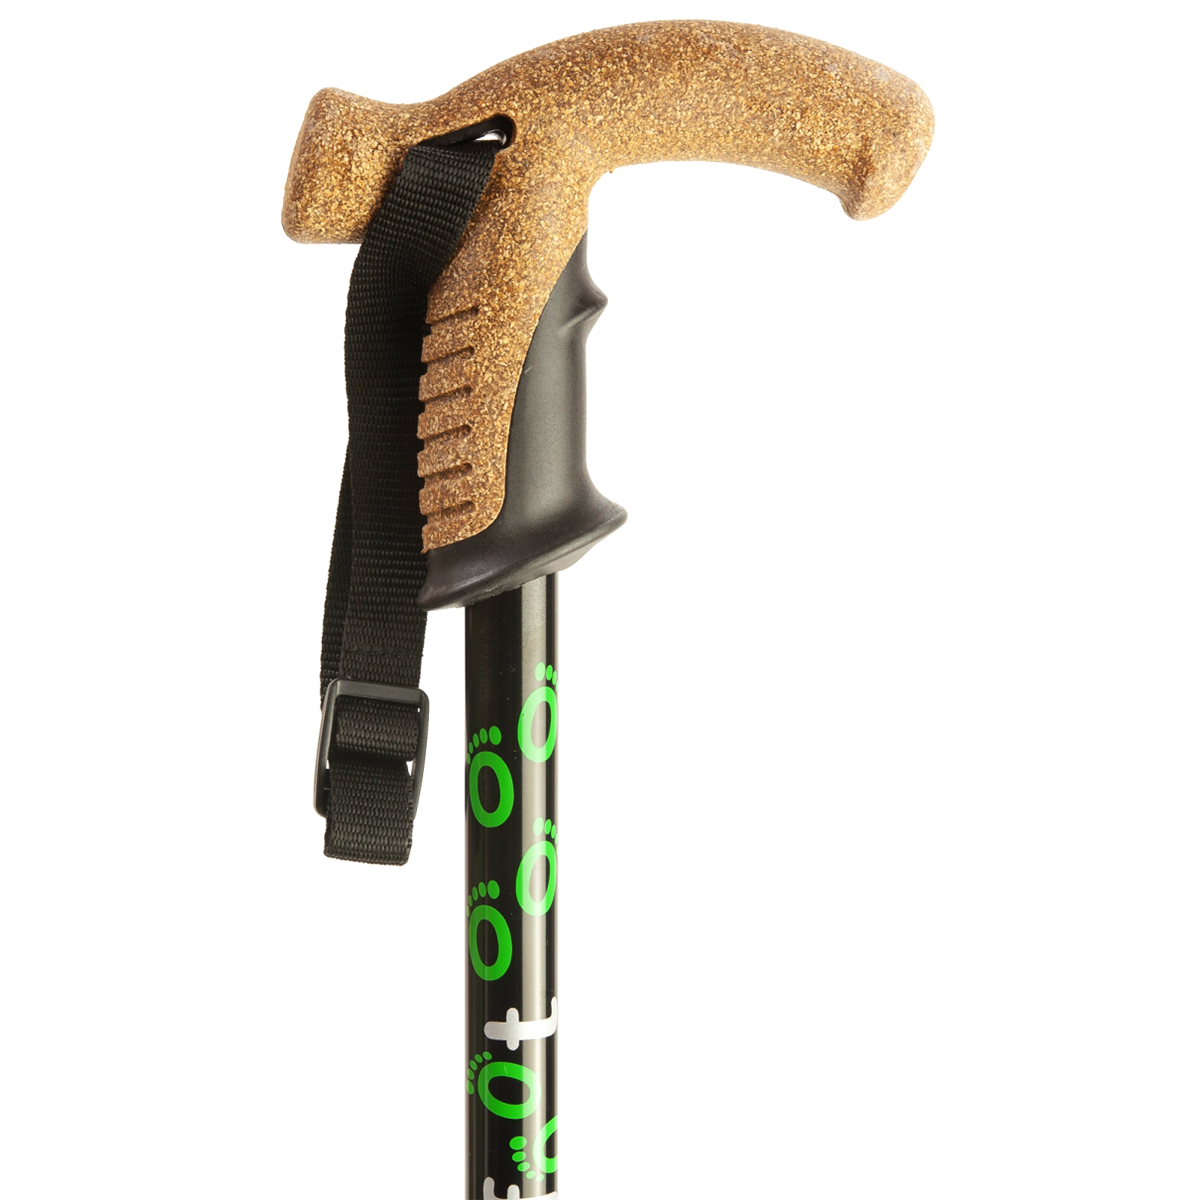 The cork handle of a black Flexyfoot Premium Cork Handle Folding Walking Stick